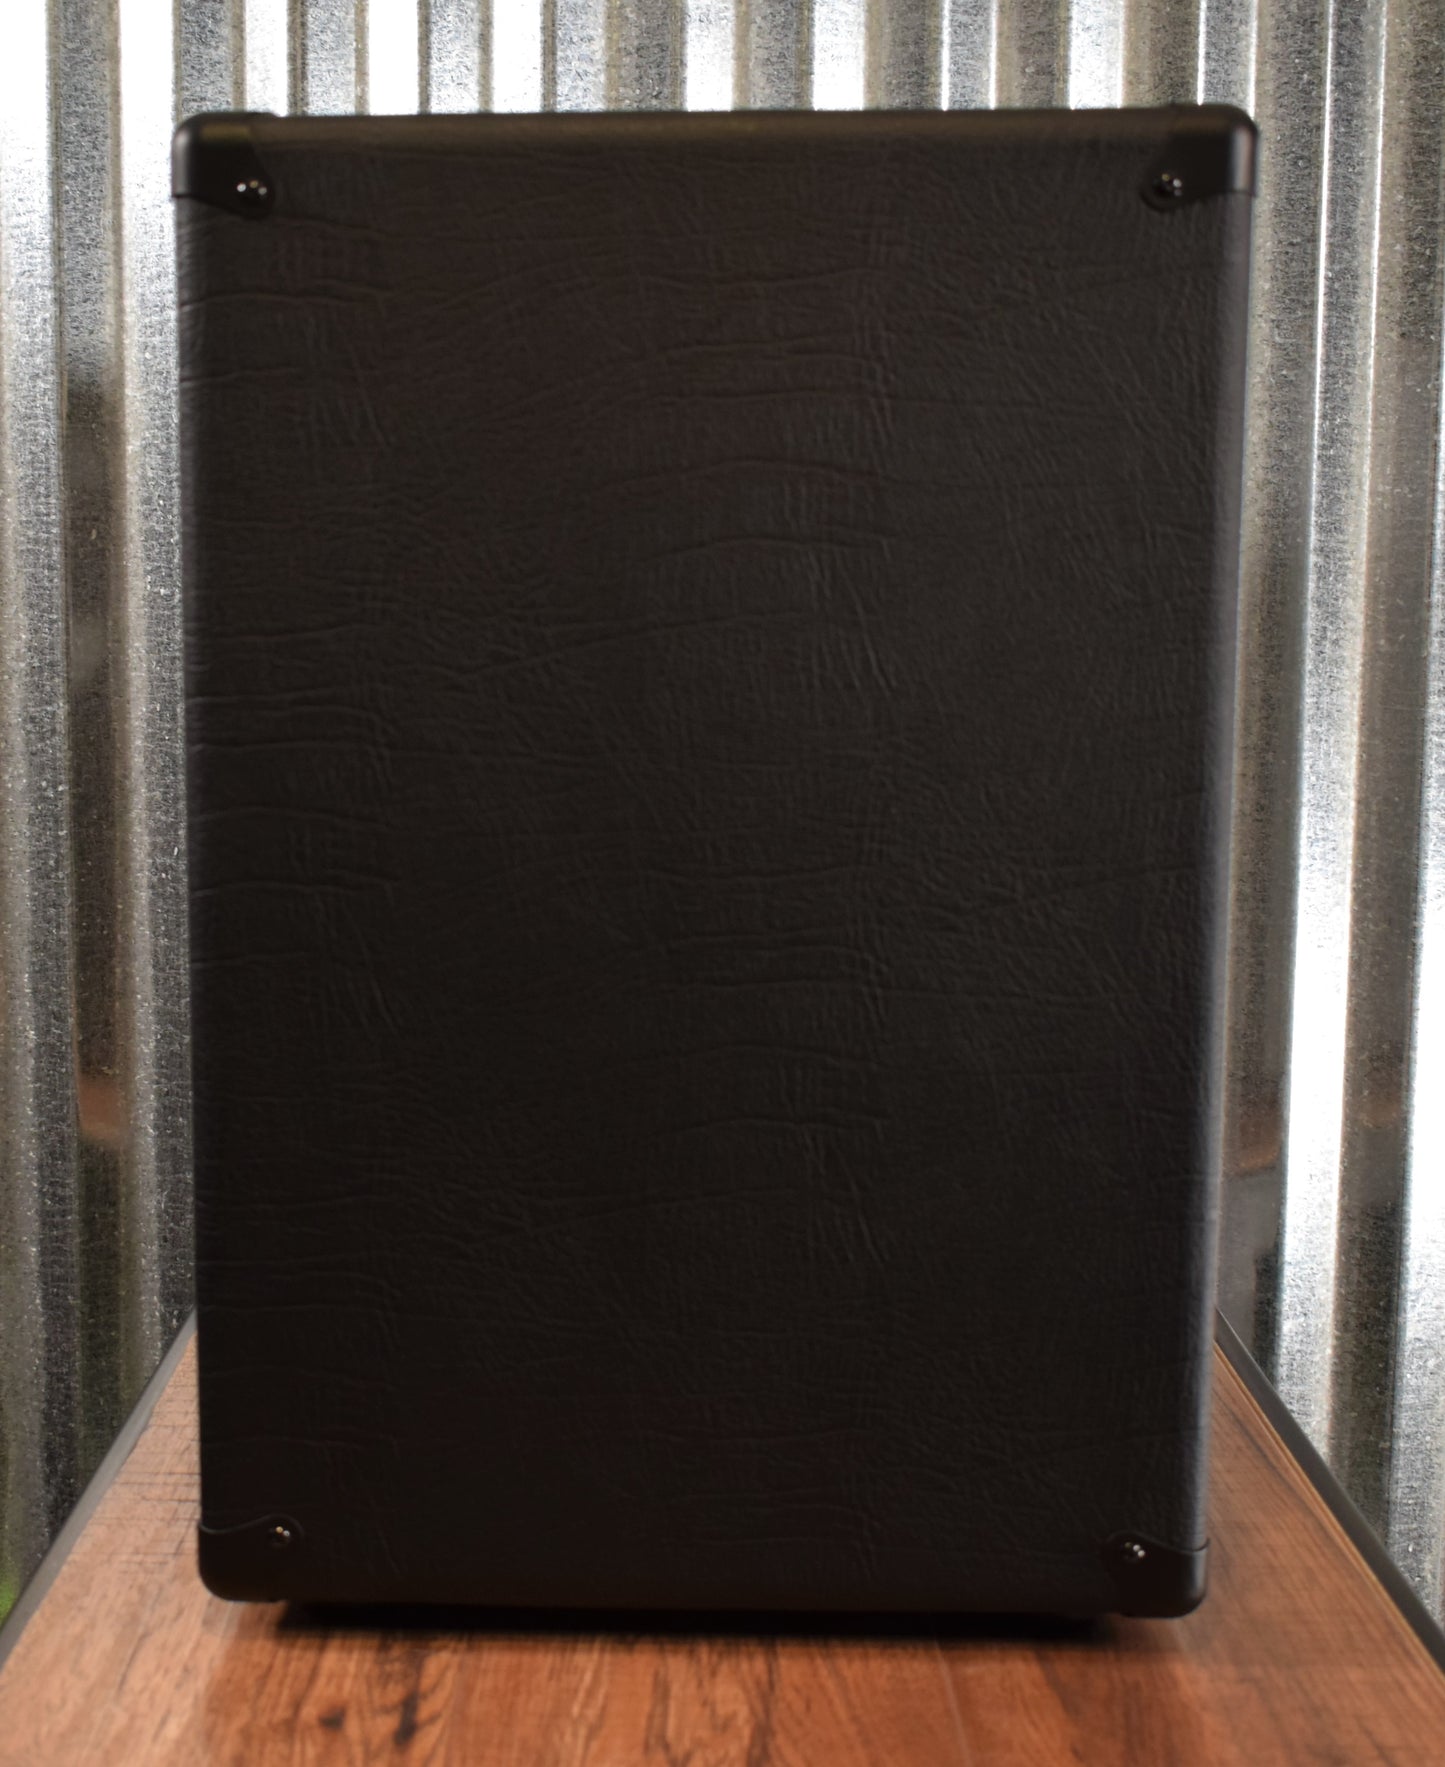 Ashdown Engineering  Root Master RM210T-EVO II 300 Watt 2x10" Super Lightweight Bass Amp Speaker Cabinet Demo